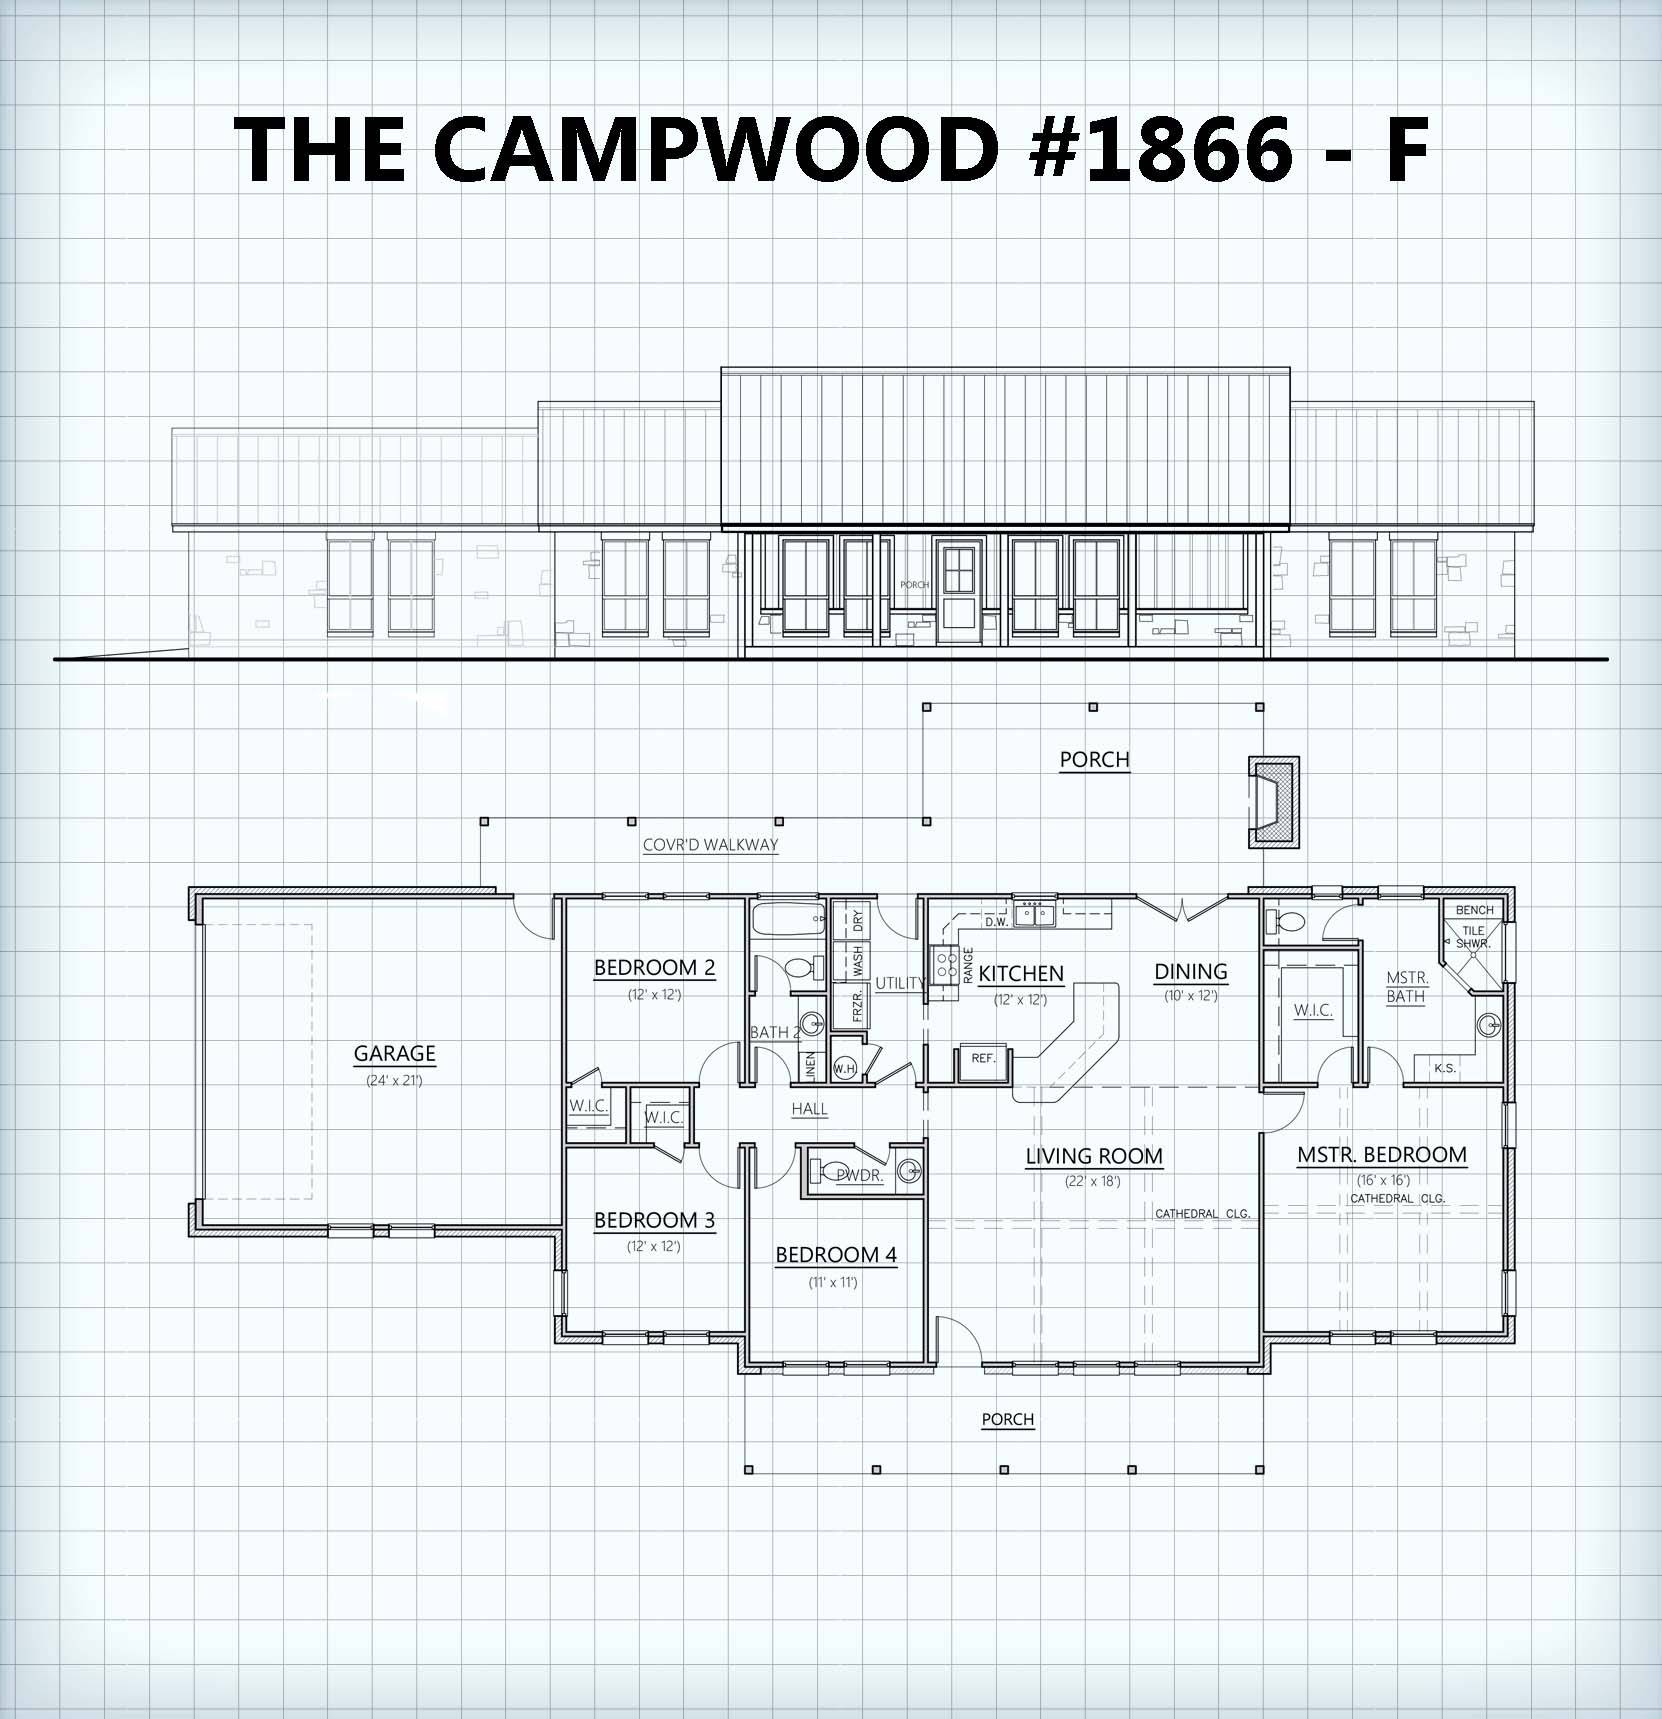 The Campwood 1866 F